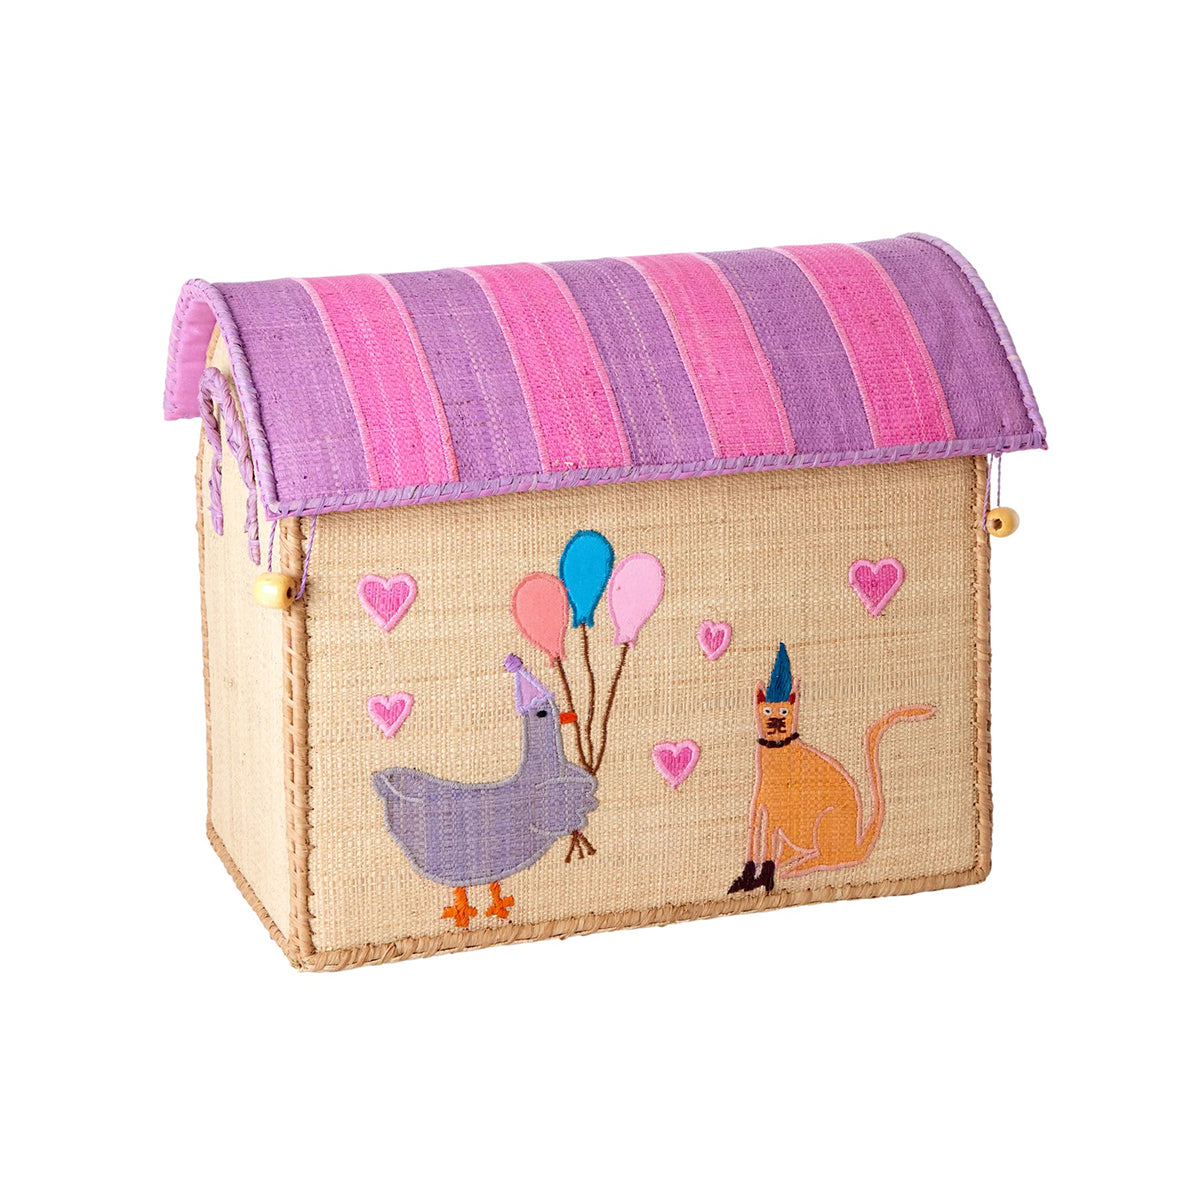 rice-raffia-toy-storage-basket-pink-party-animal-theme-small